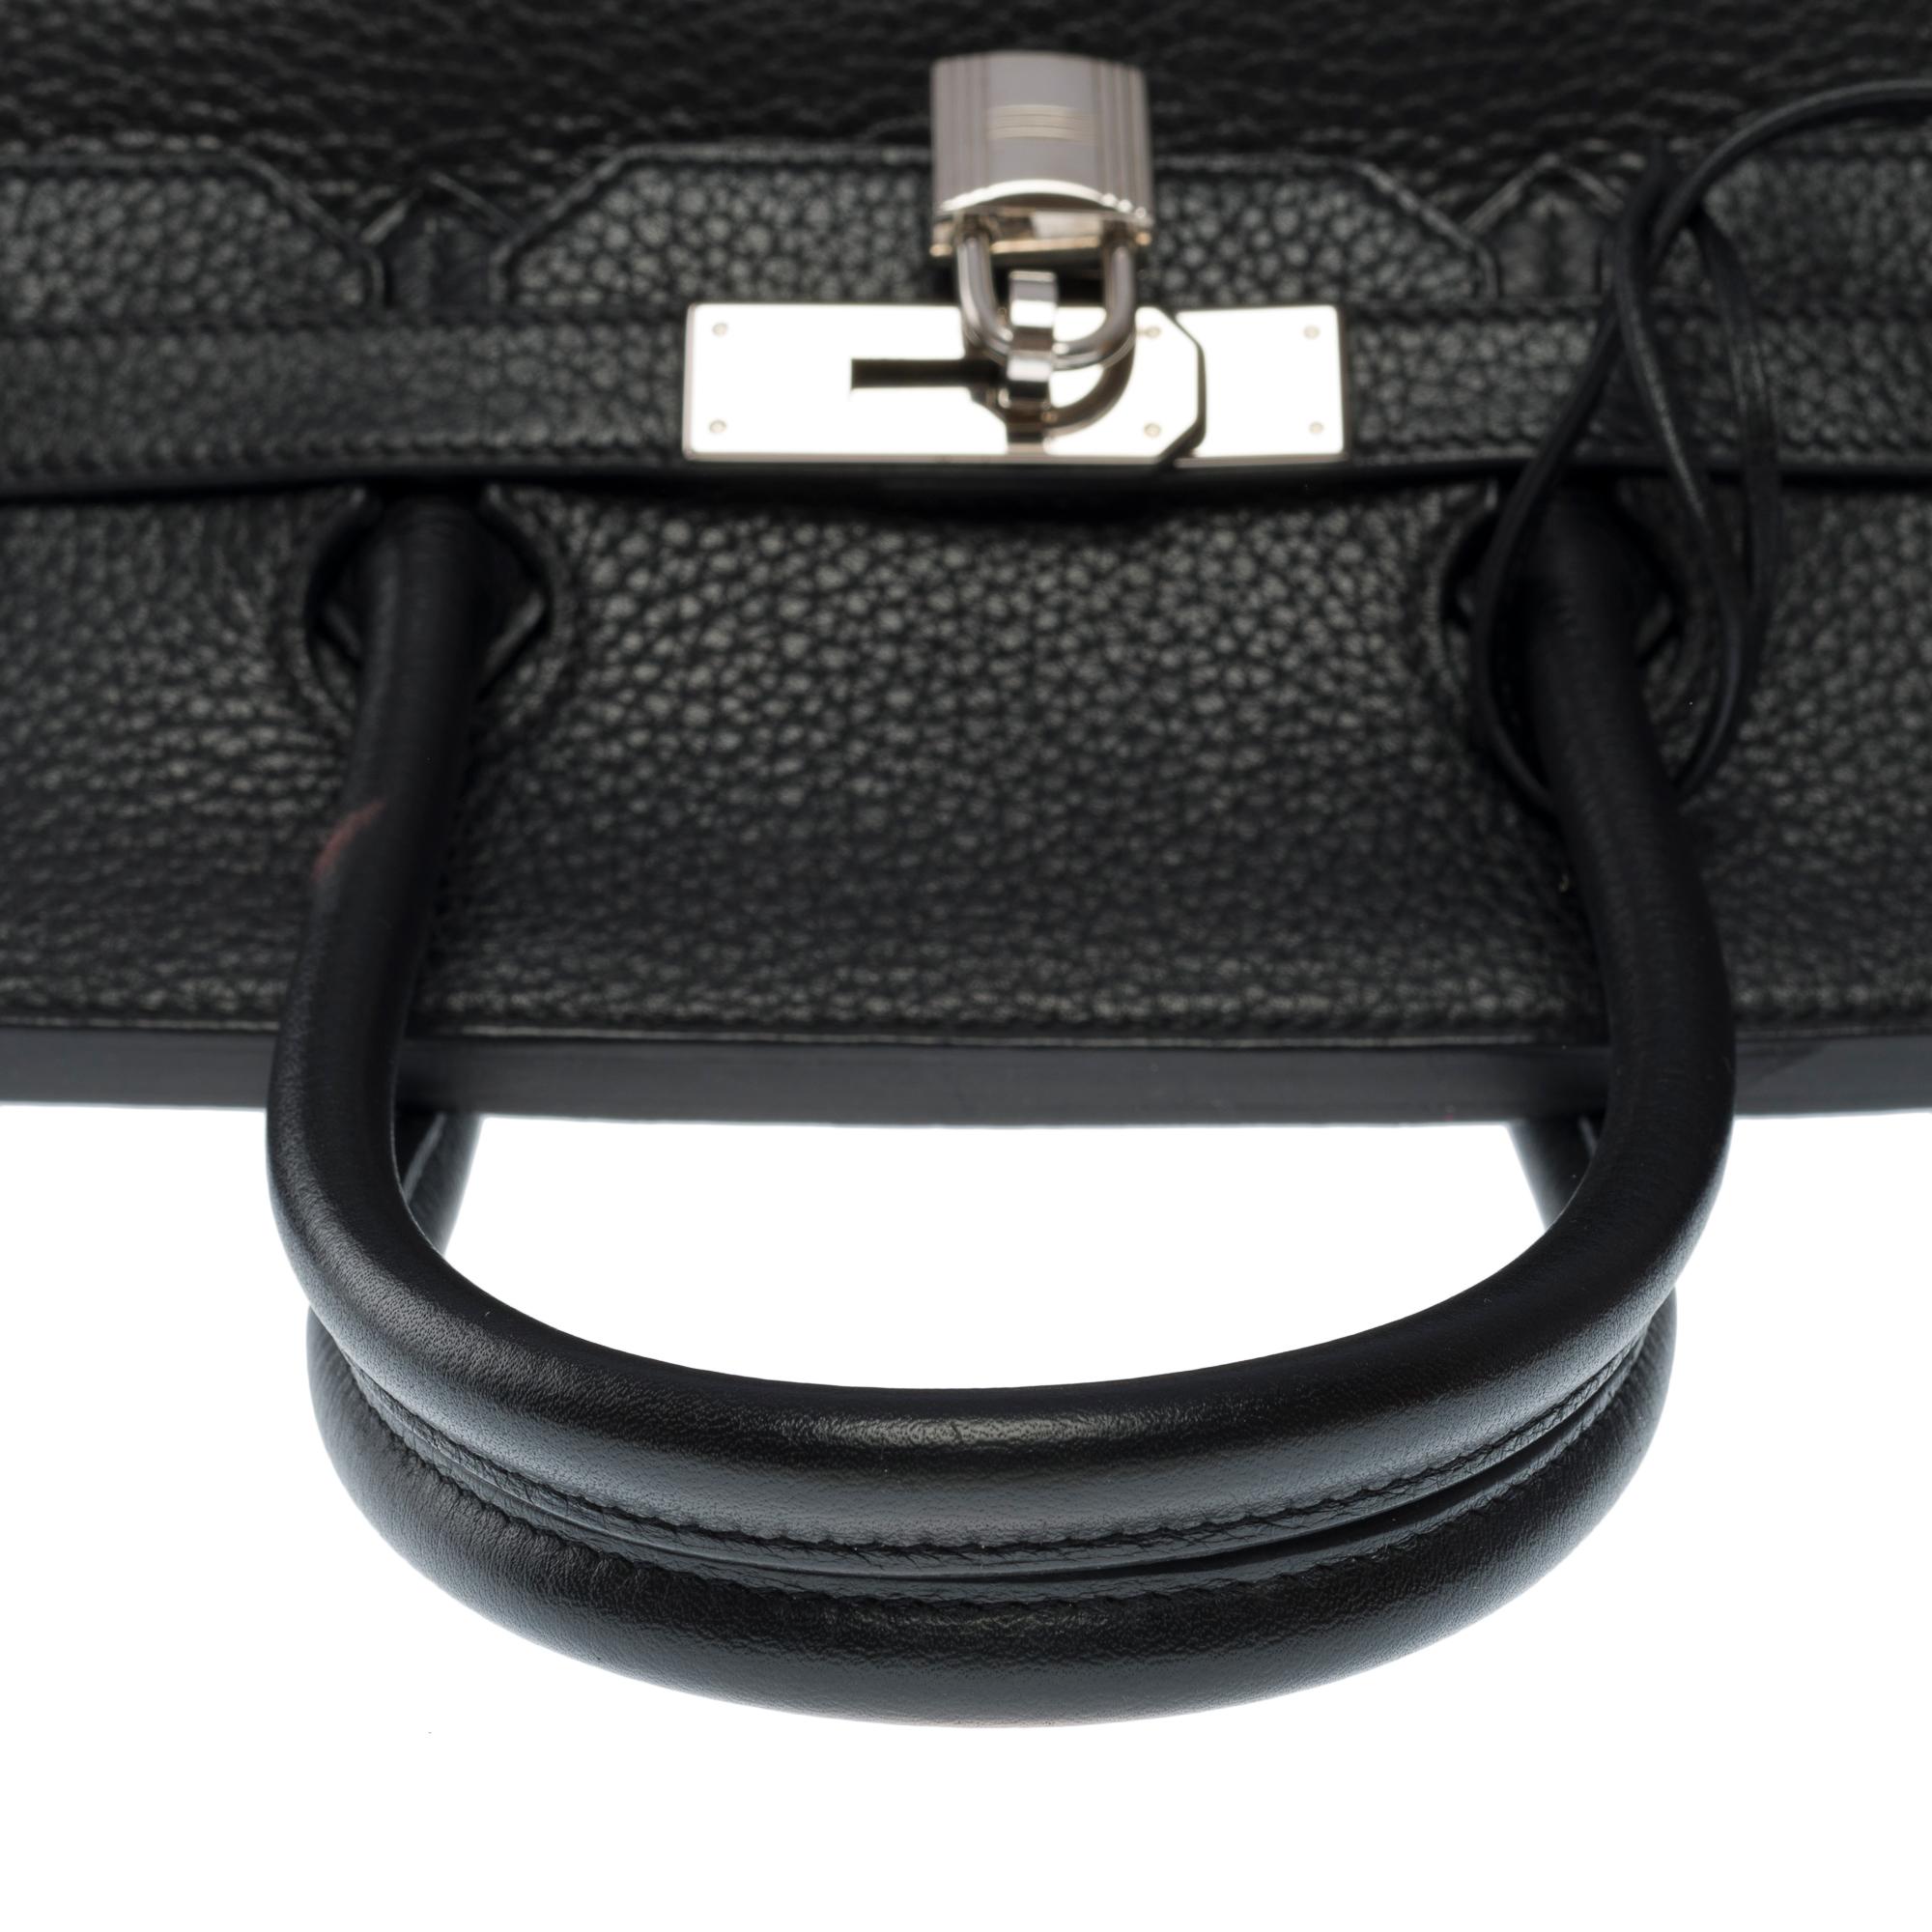 Amazing Hermès Birkin 35 handbag in black Togo leather, SHW 5